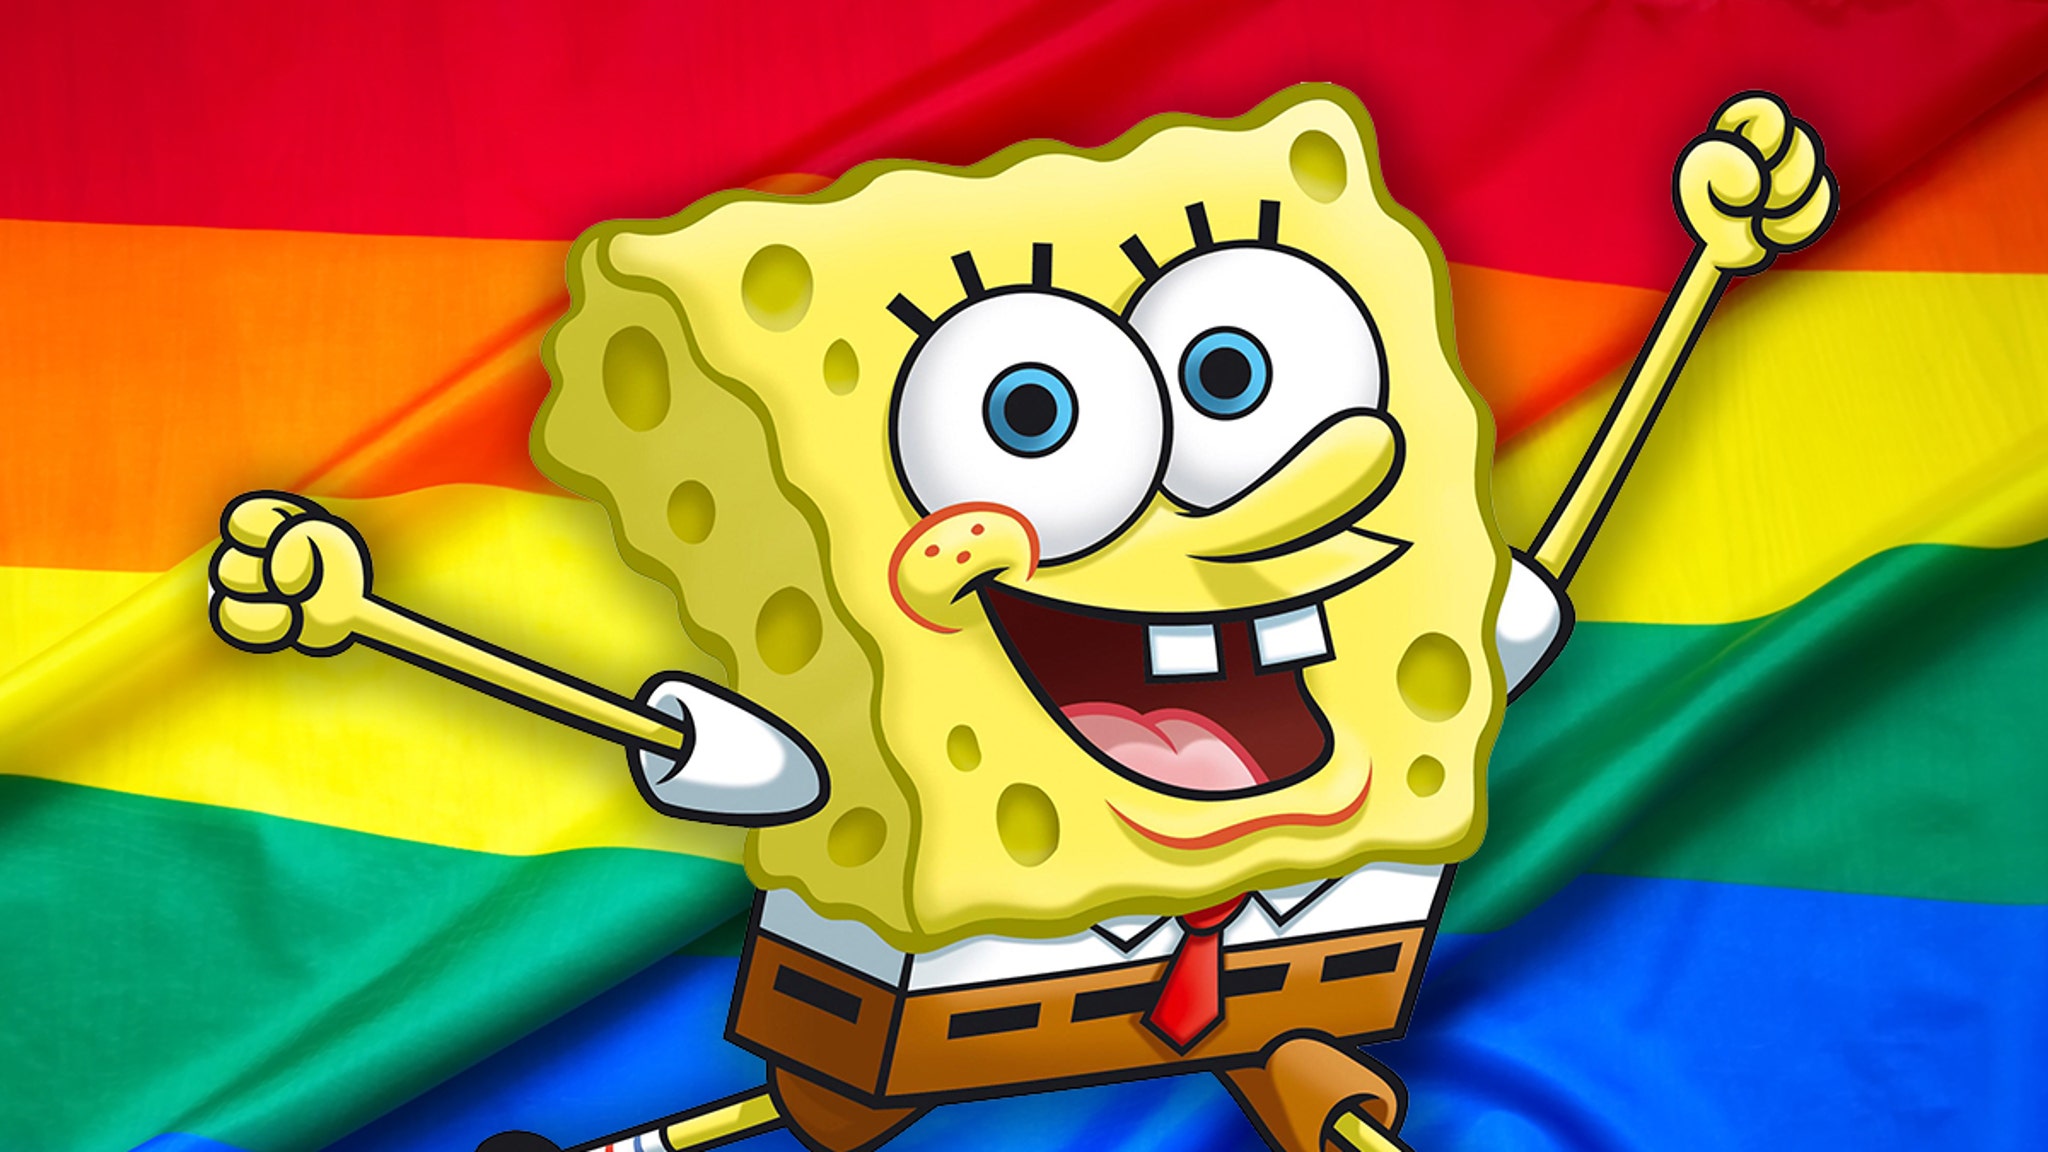 SpongeBob SquarePants Revealed as LGBTQ Ally for Pride Month